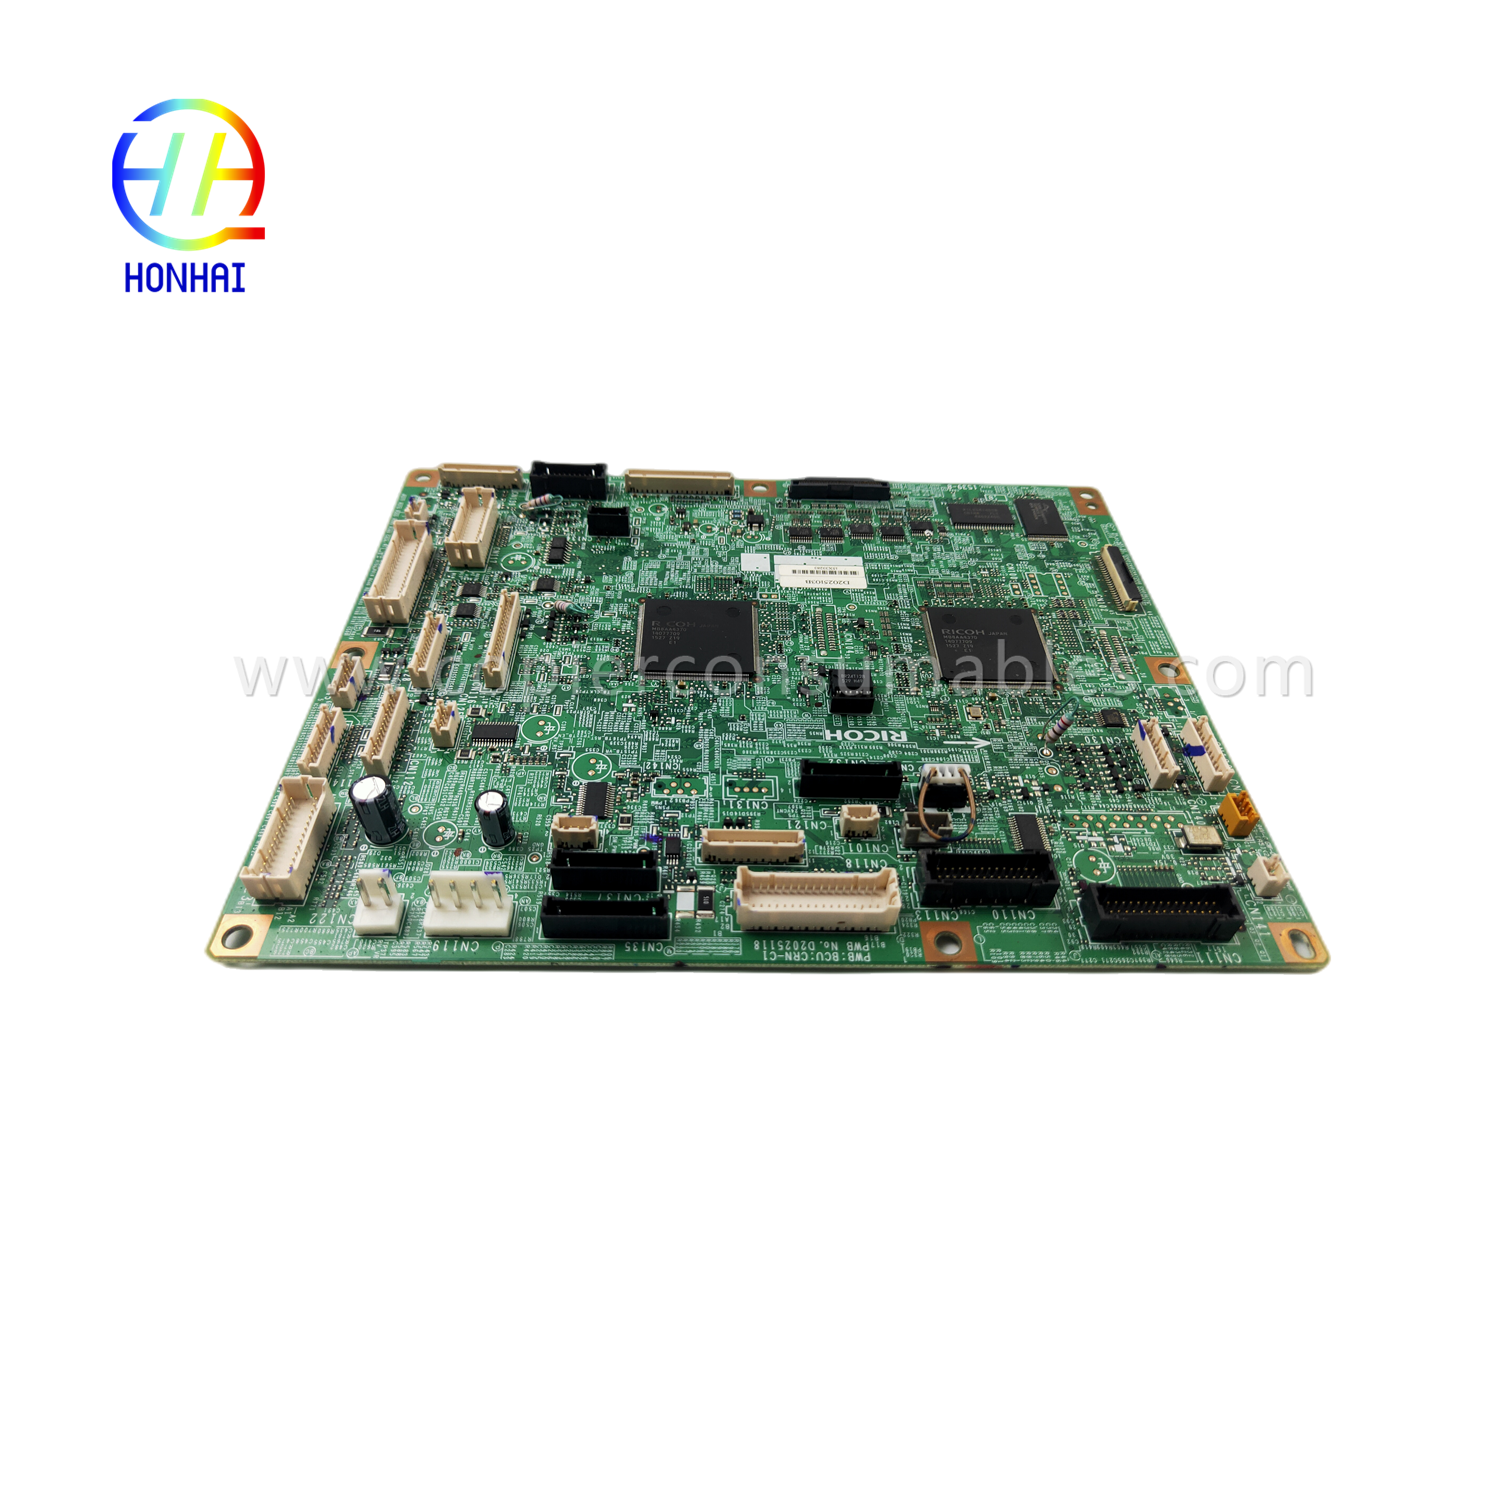 https://c585.goodao.net/bicu-board-for-ricoh-3045-3035-lanier-ld235-ld245-savin-4035-4045-bicu-board-assemblyproduct/